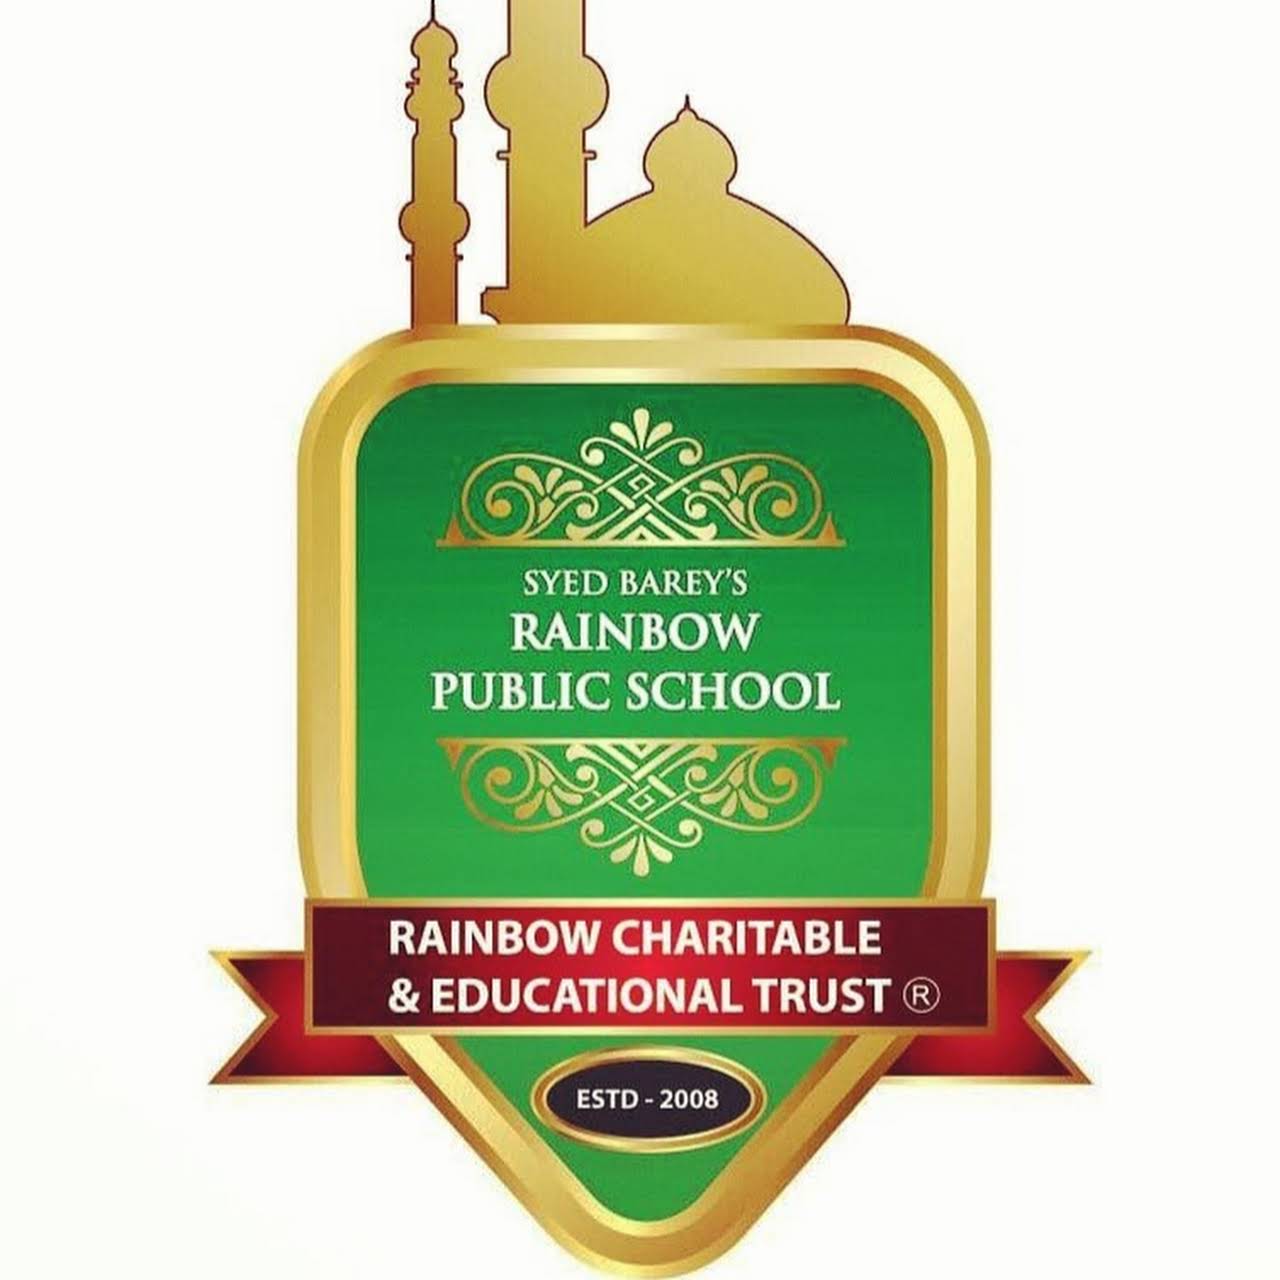 Syed barey's Rainbow Public School|Schools|Education